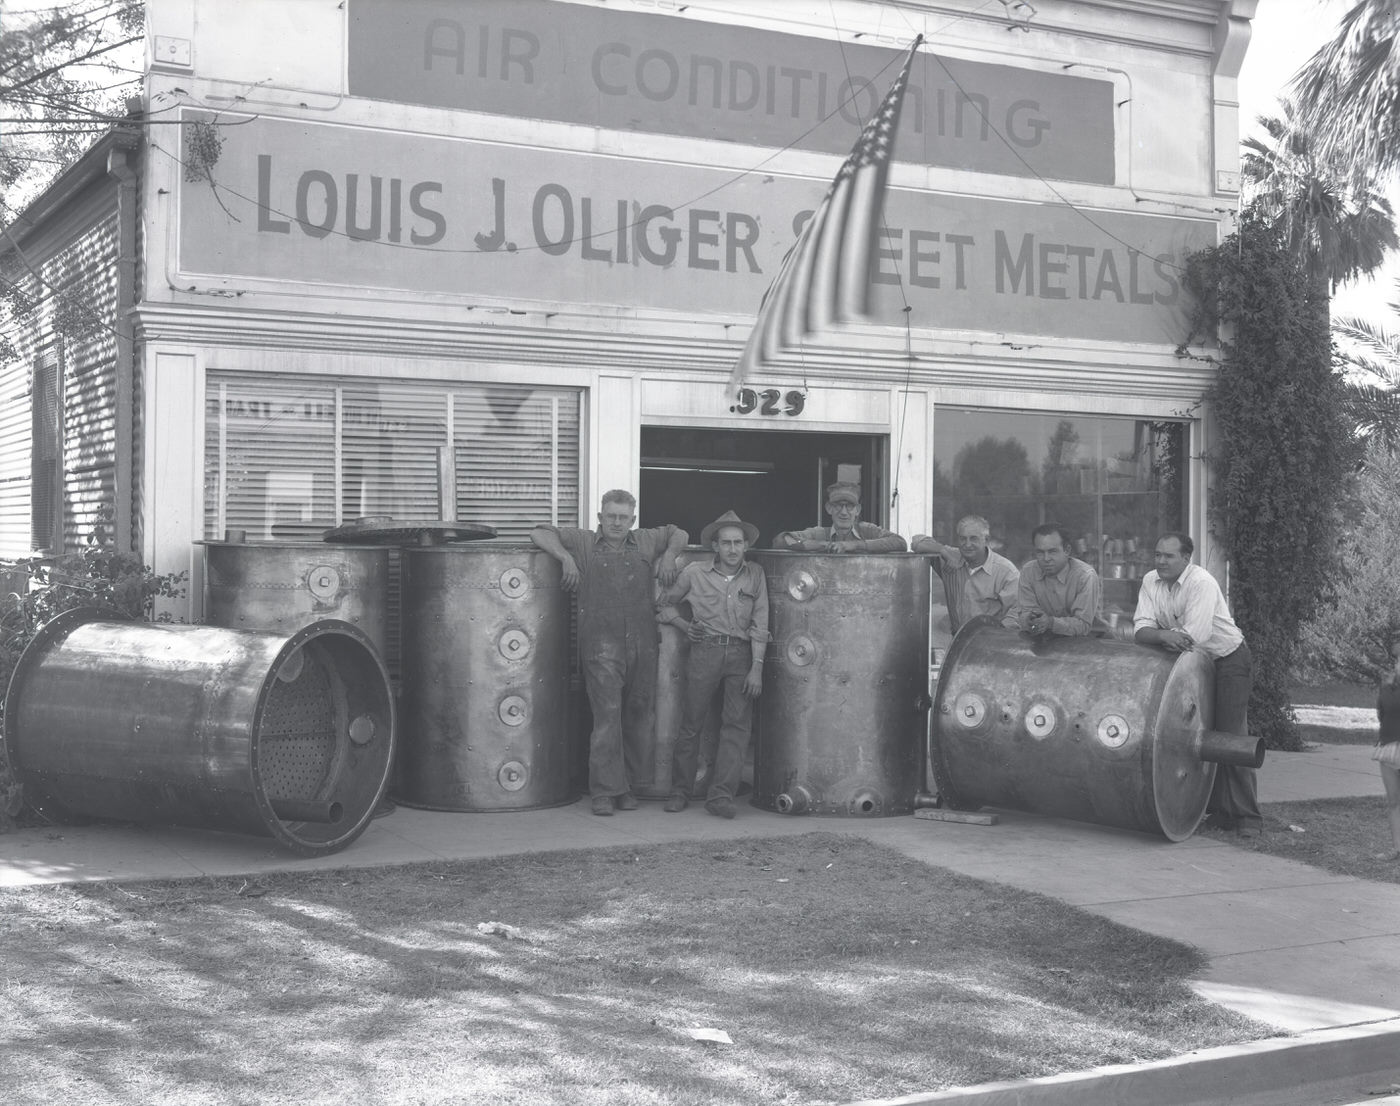 Louis J. Oliger Sheet Metals Building Exterior, 1943